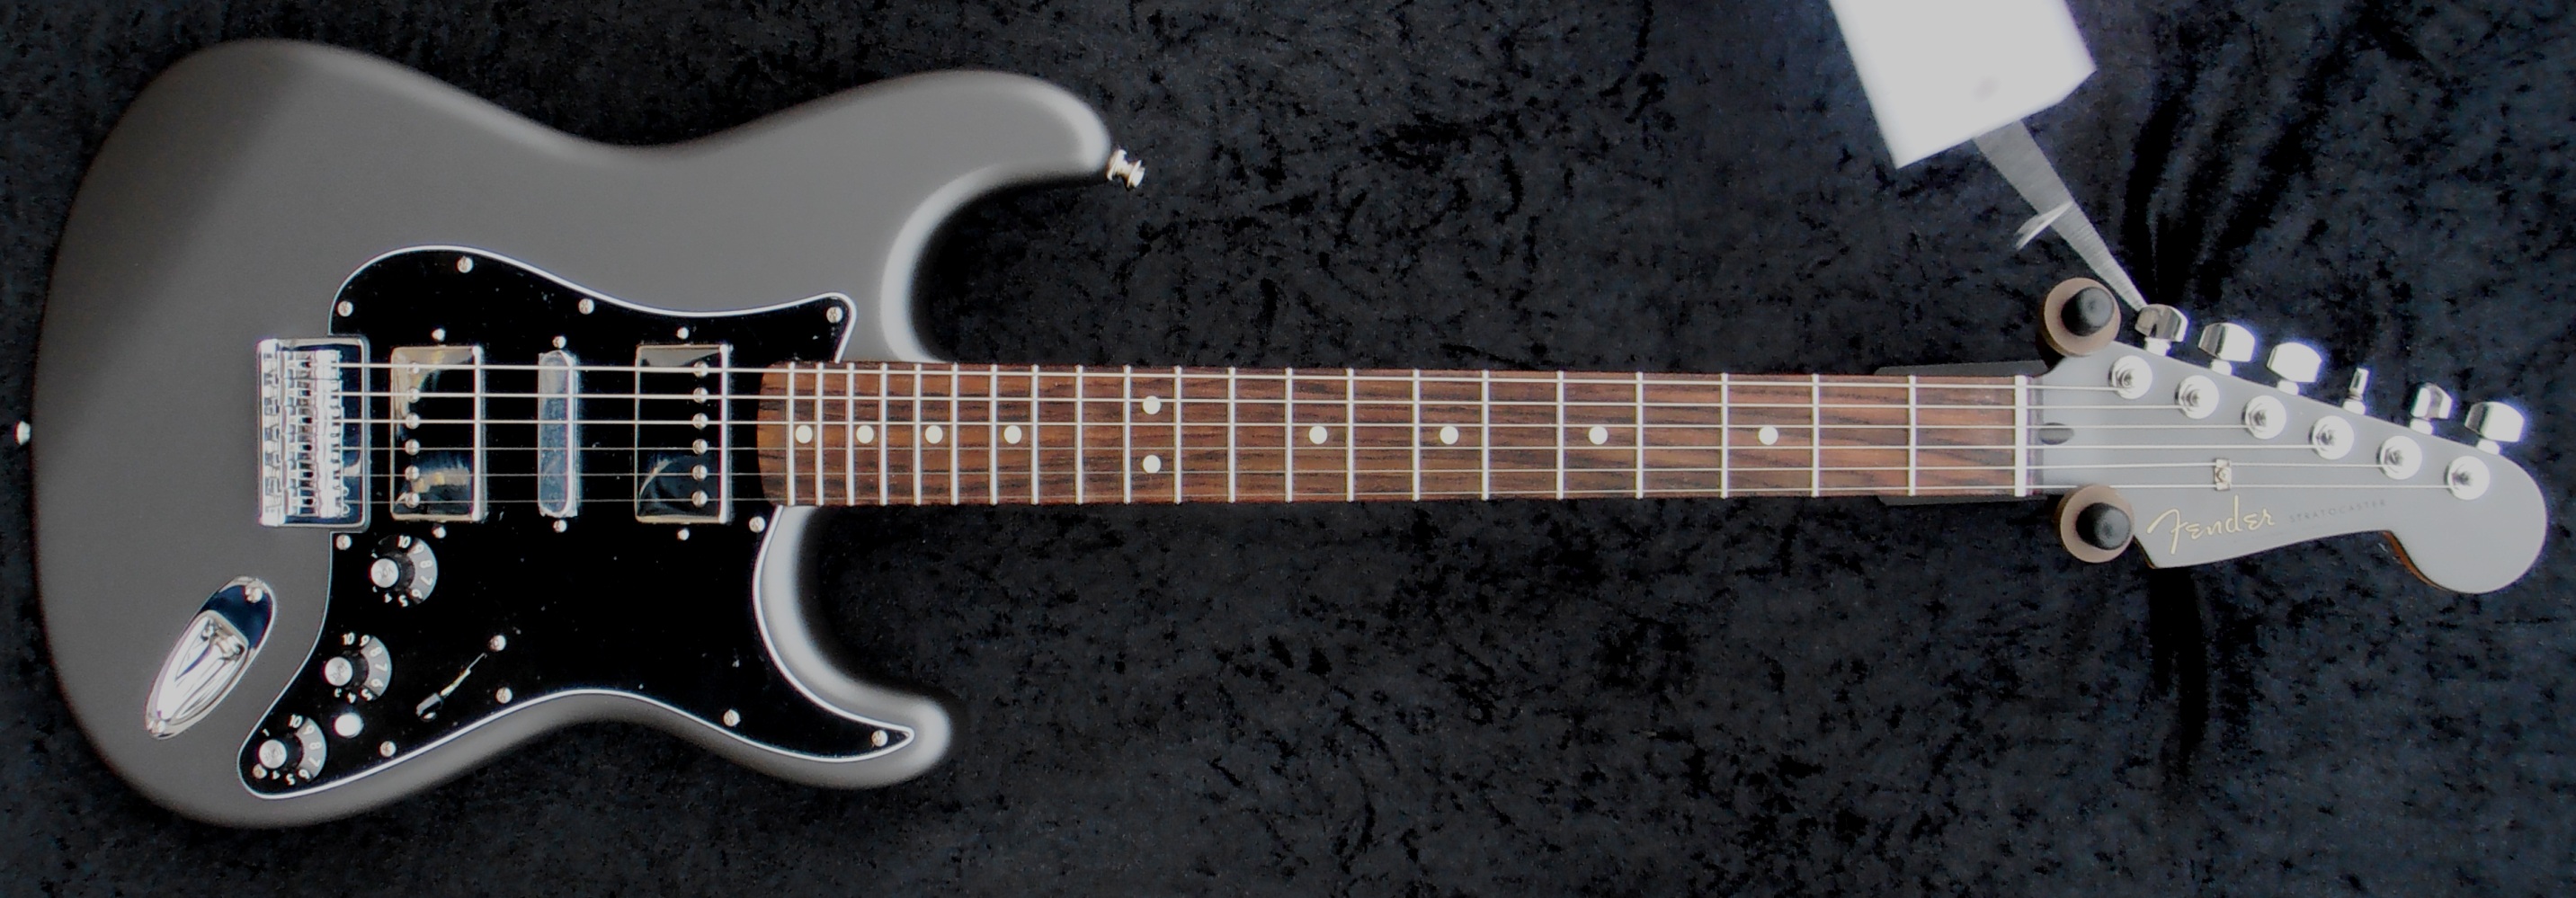 Fender Blacktop Stratocaster HSH image (427745) Audiofanzine